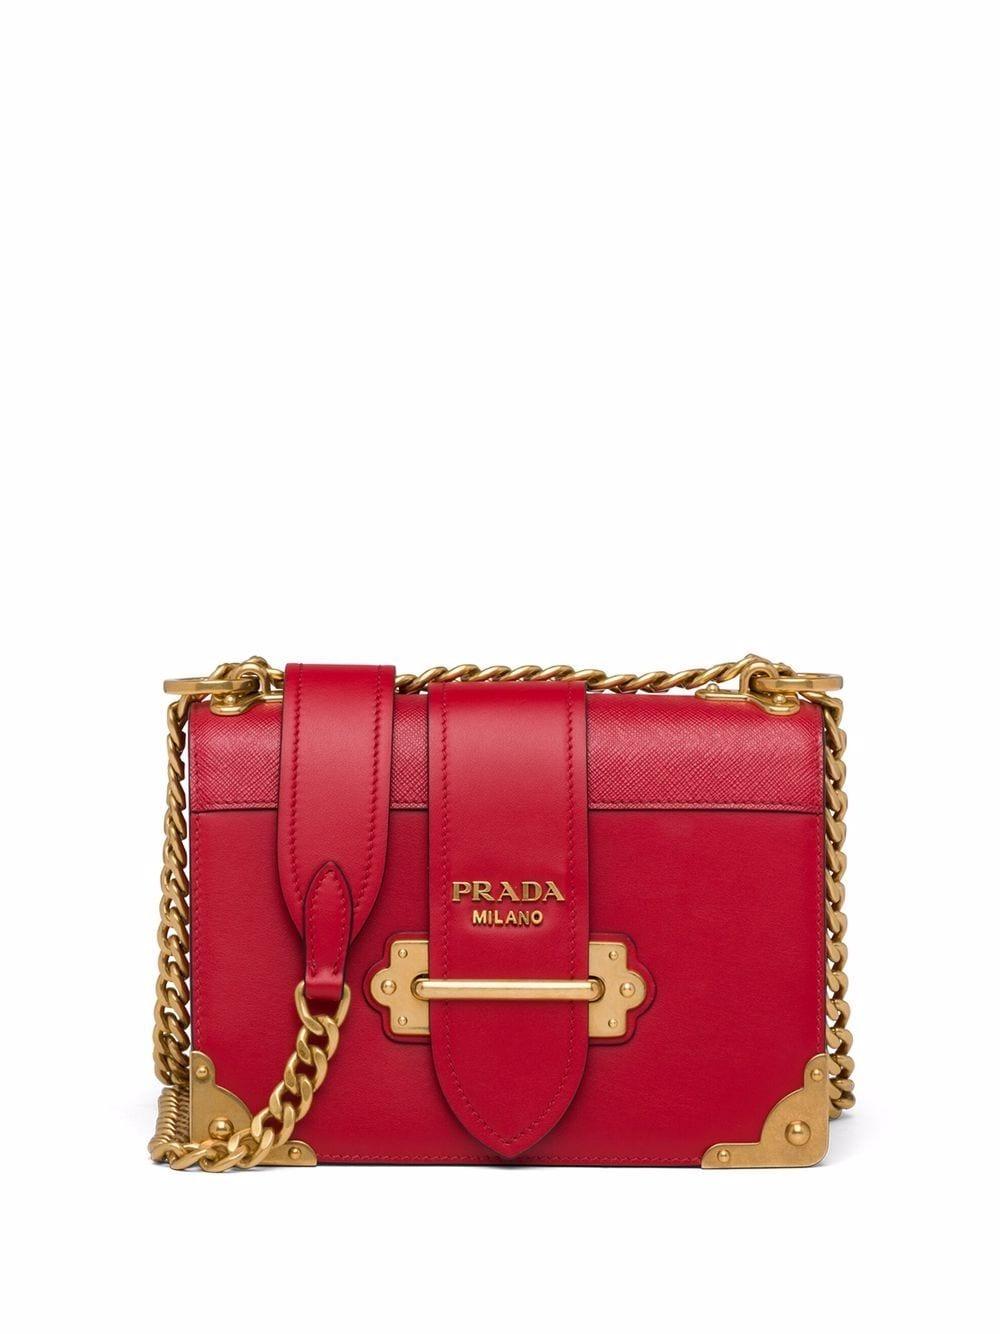 Prada Cahier Shoulder Bag in Red